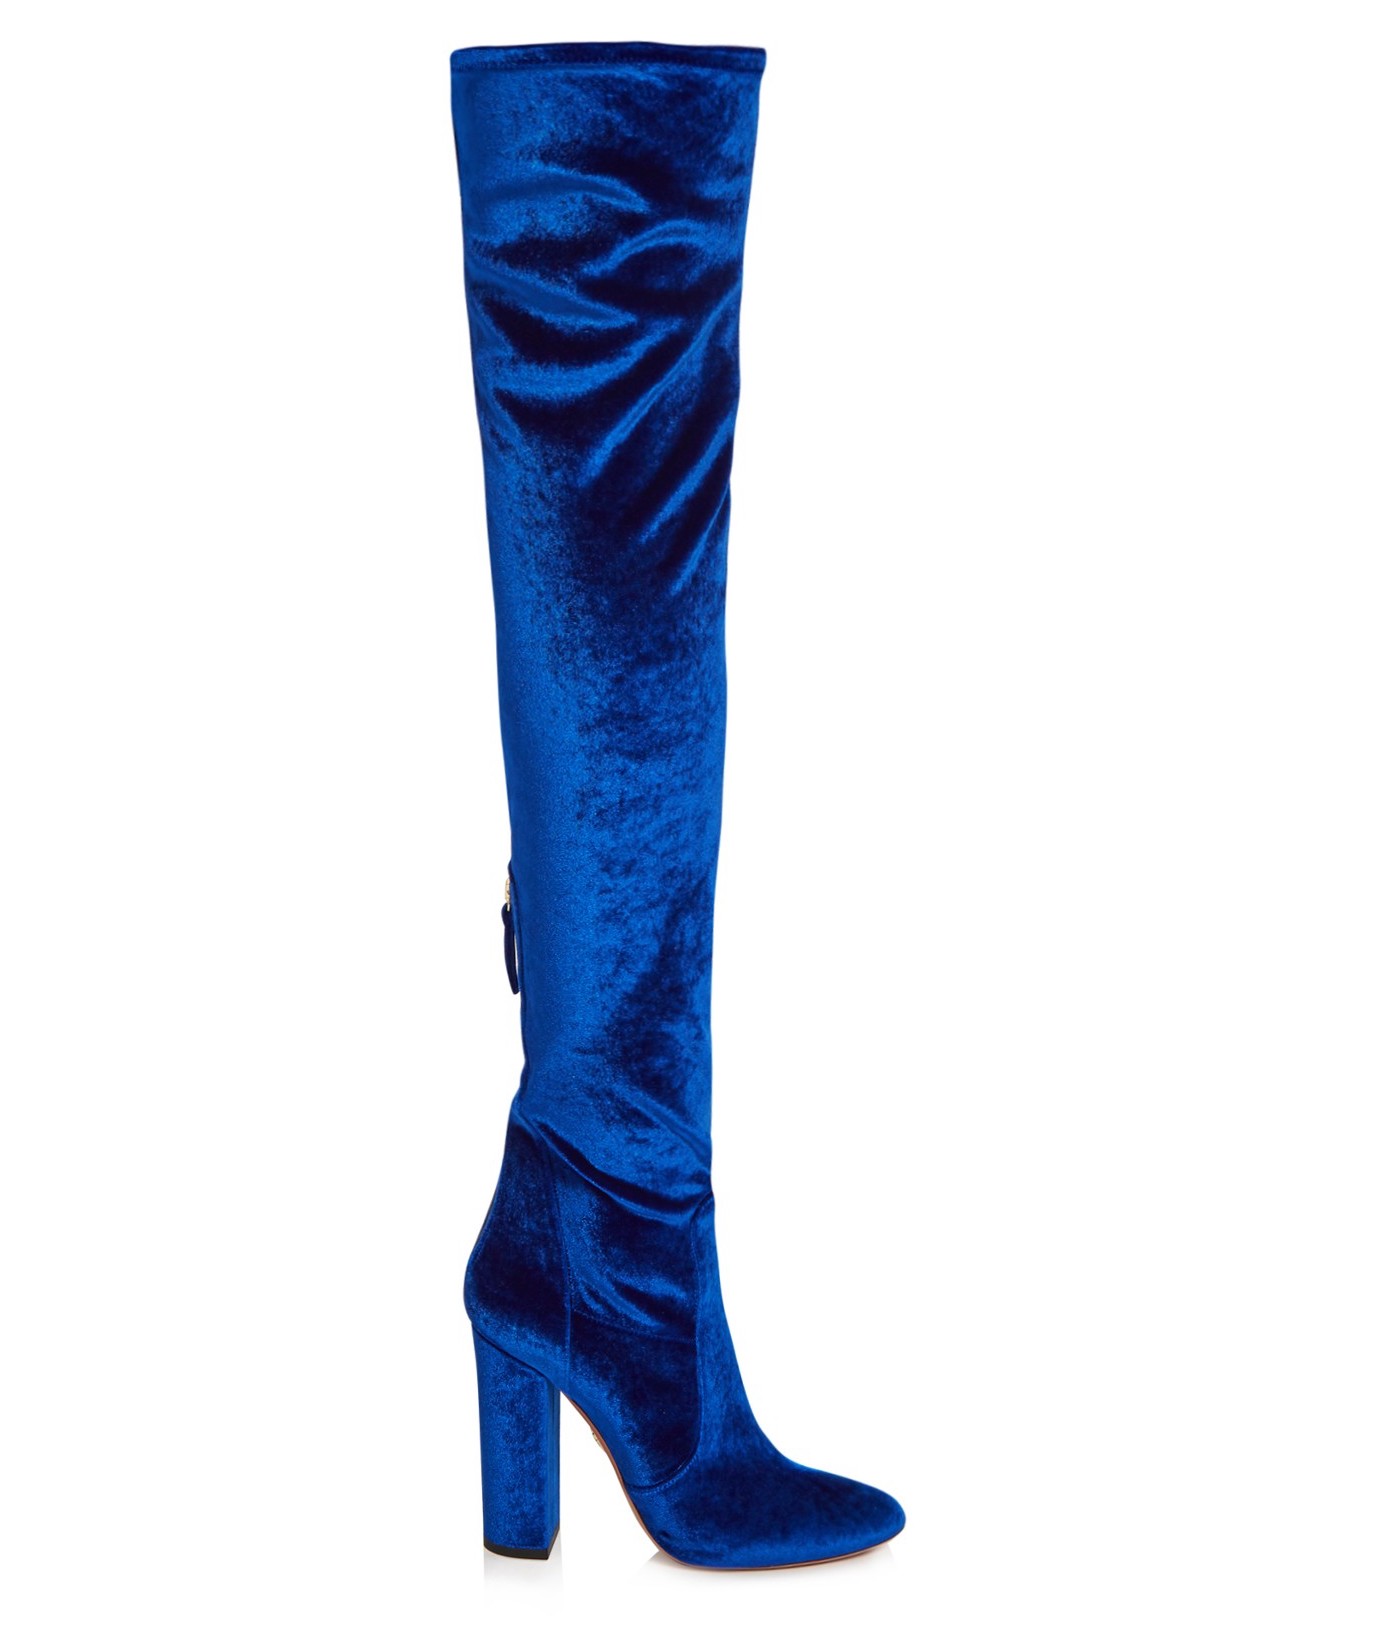 aquazzura-blue-velvet-over-the-knee-boots